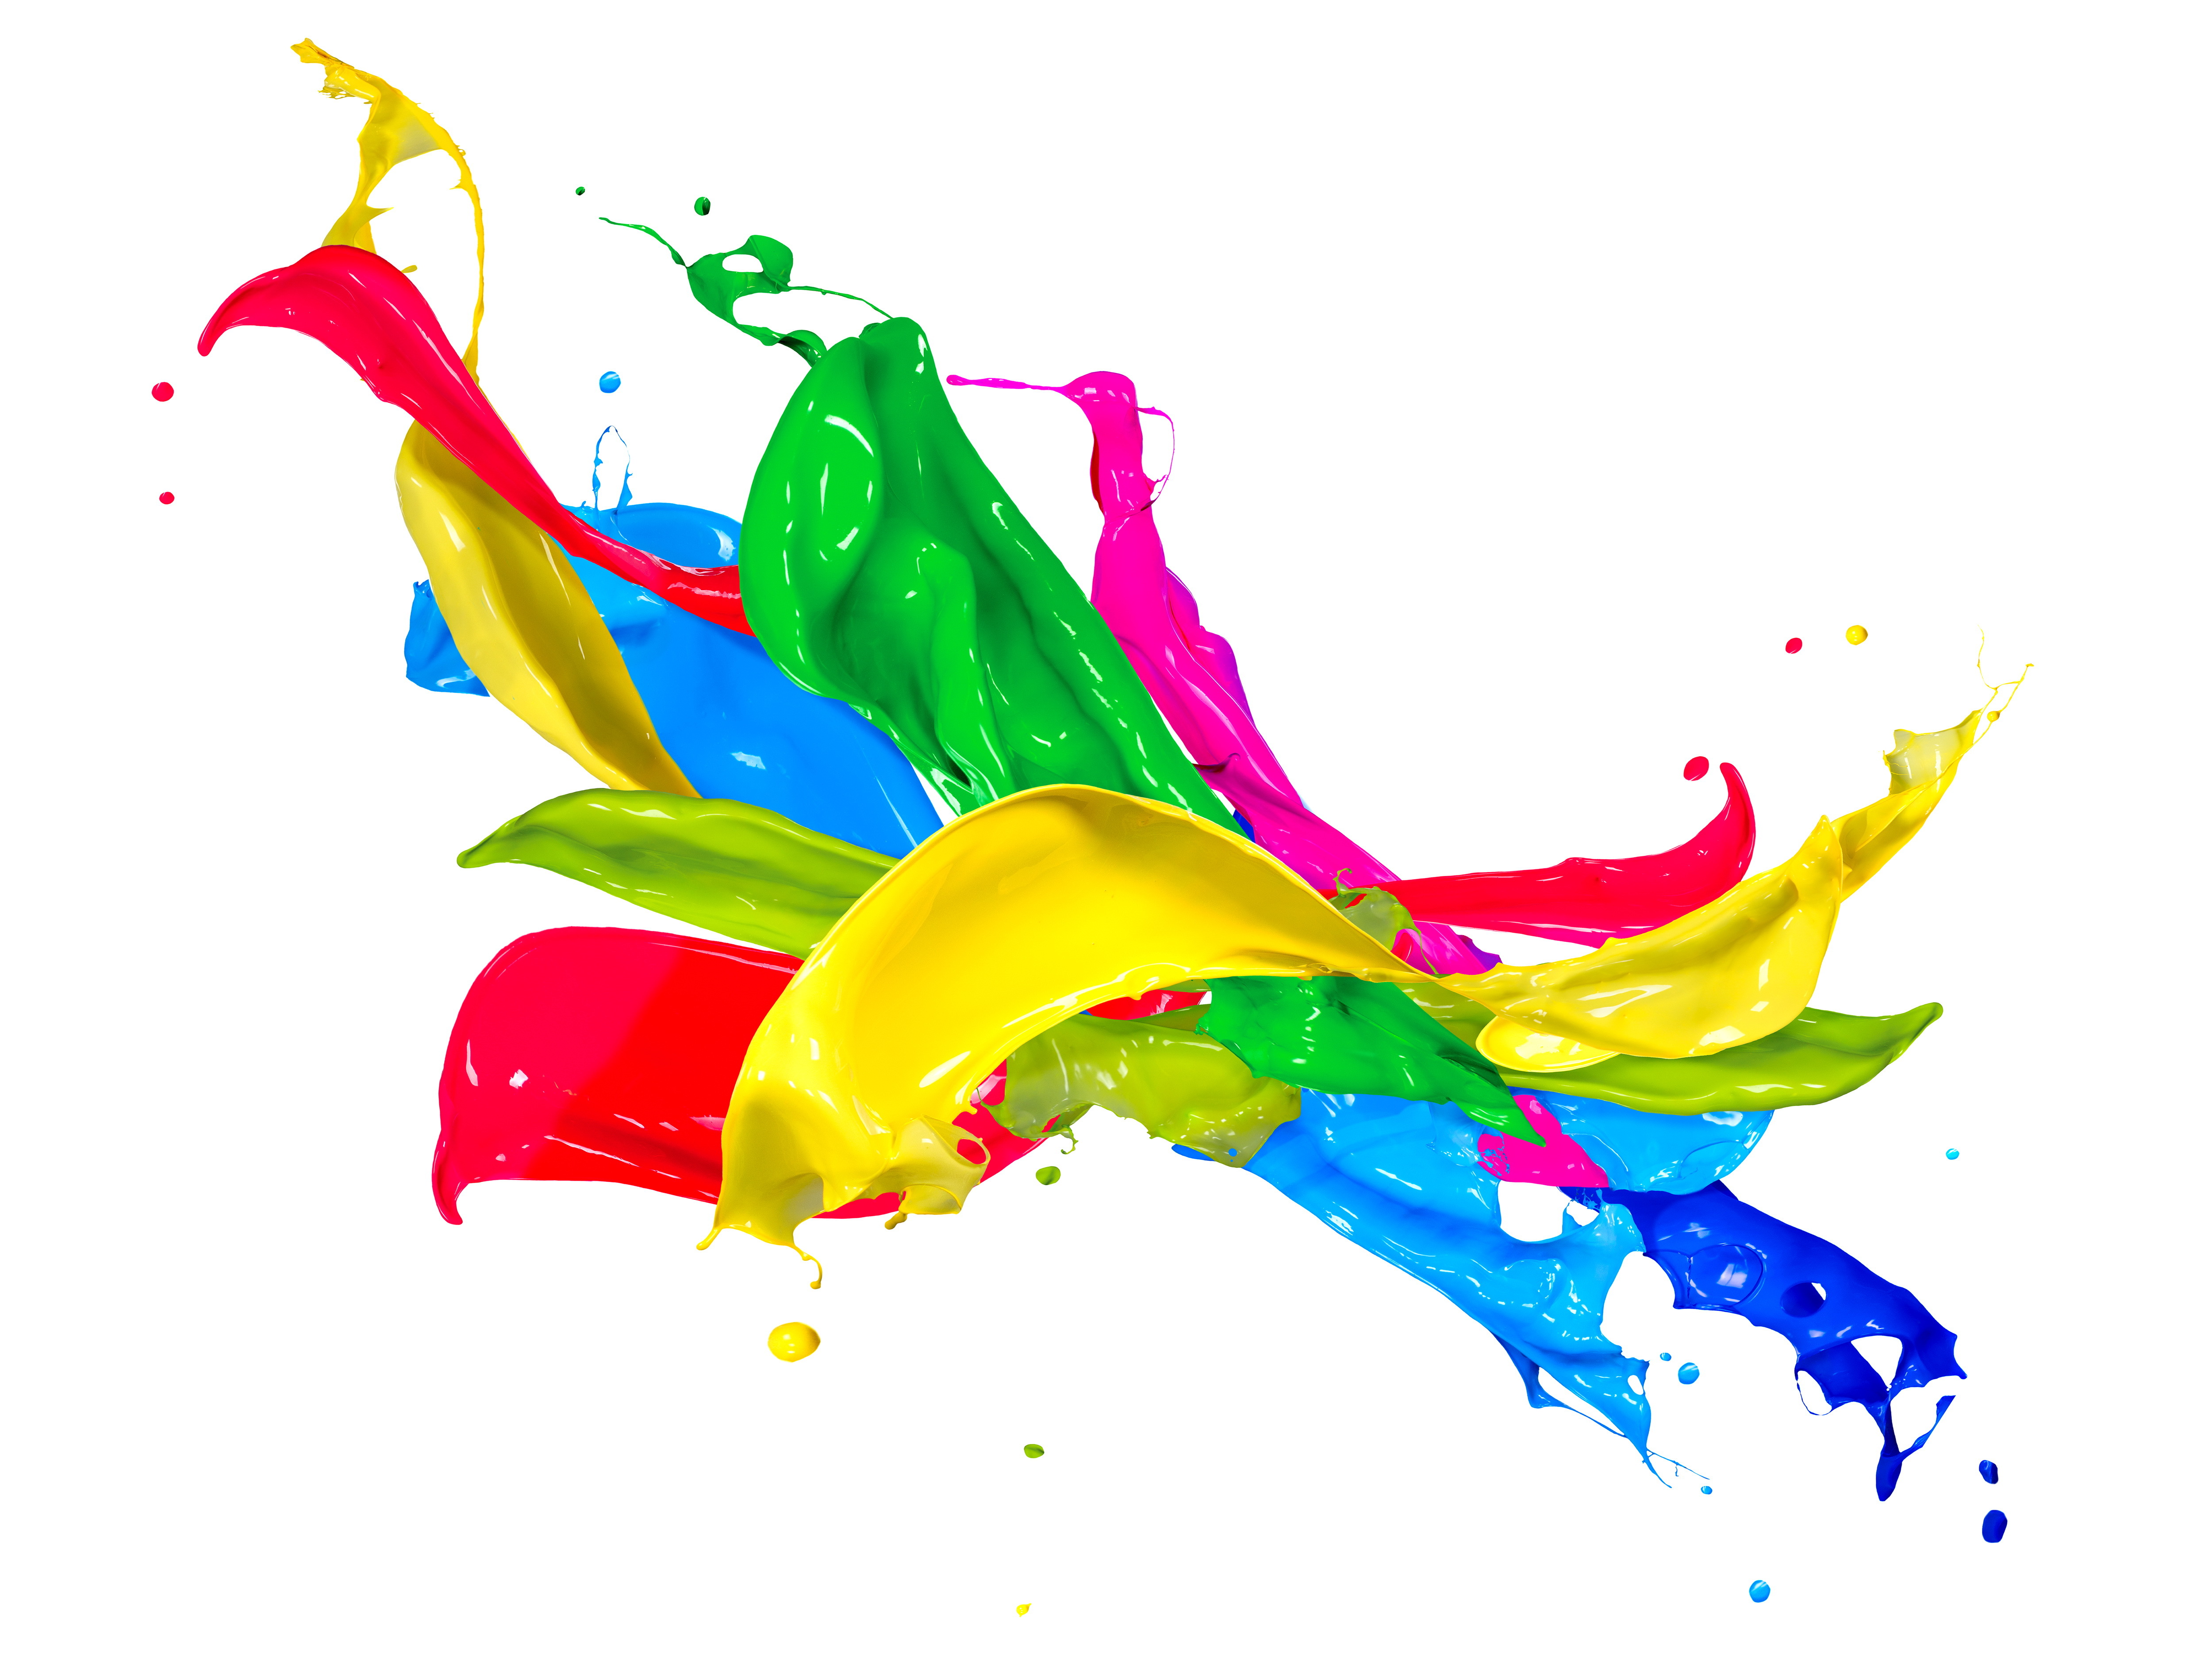 Paint Splash Colors Design Free Images At Clker Vector Clip Art | The ...